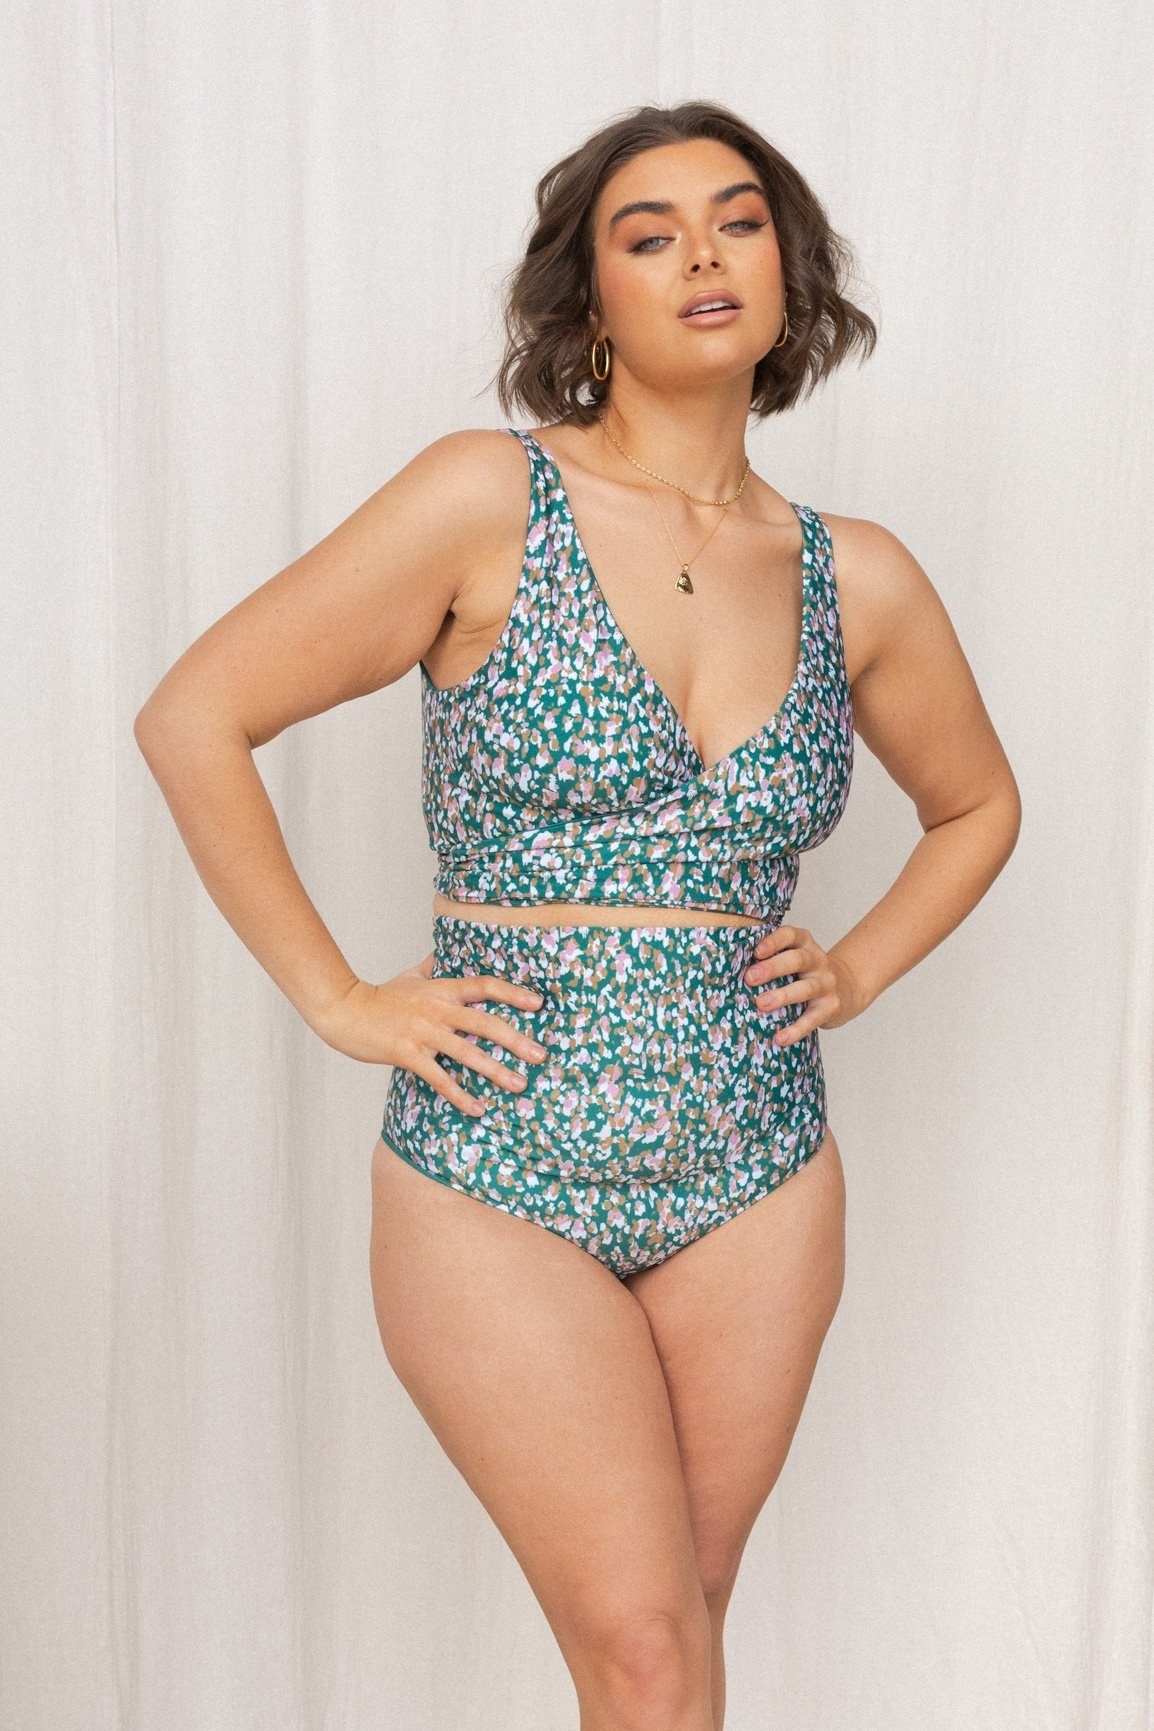 Shaping Swimwear ~ Made for loving your figure – Baiia Swimwear